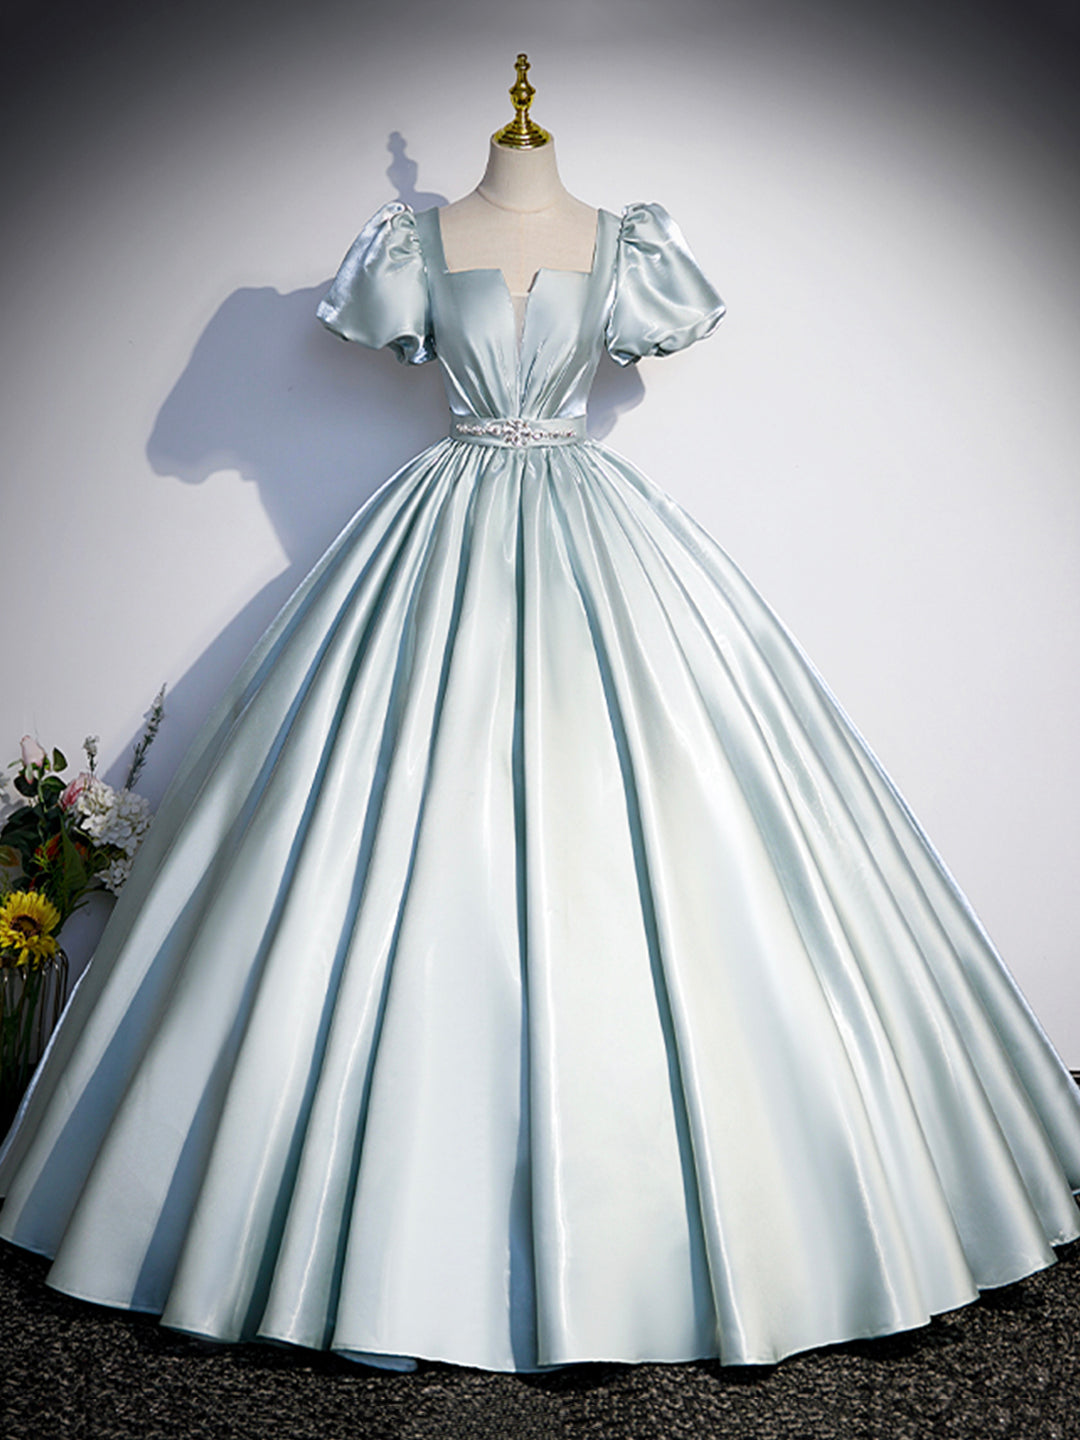 Beautiful Satin Floor Length Prom Dress, A-Line Short Sleeve Evening Party Dress